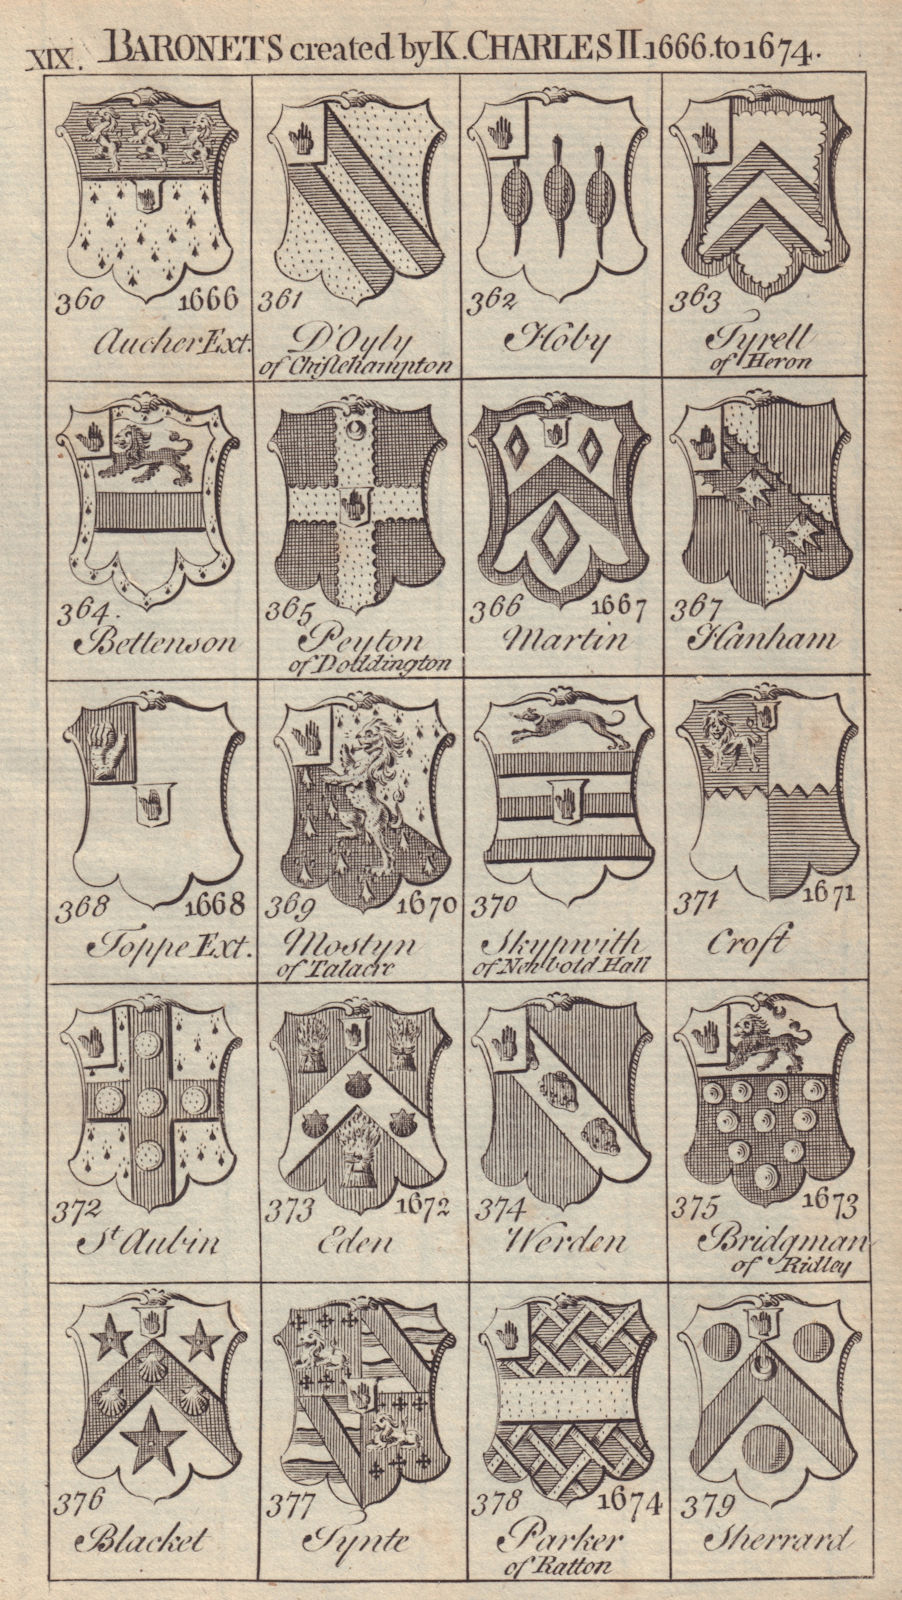 Charles II Baronets 1666-74 Aucher Hoby Bettenson Martin Hanham Toppe Croft 1752